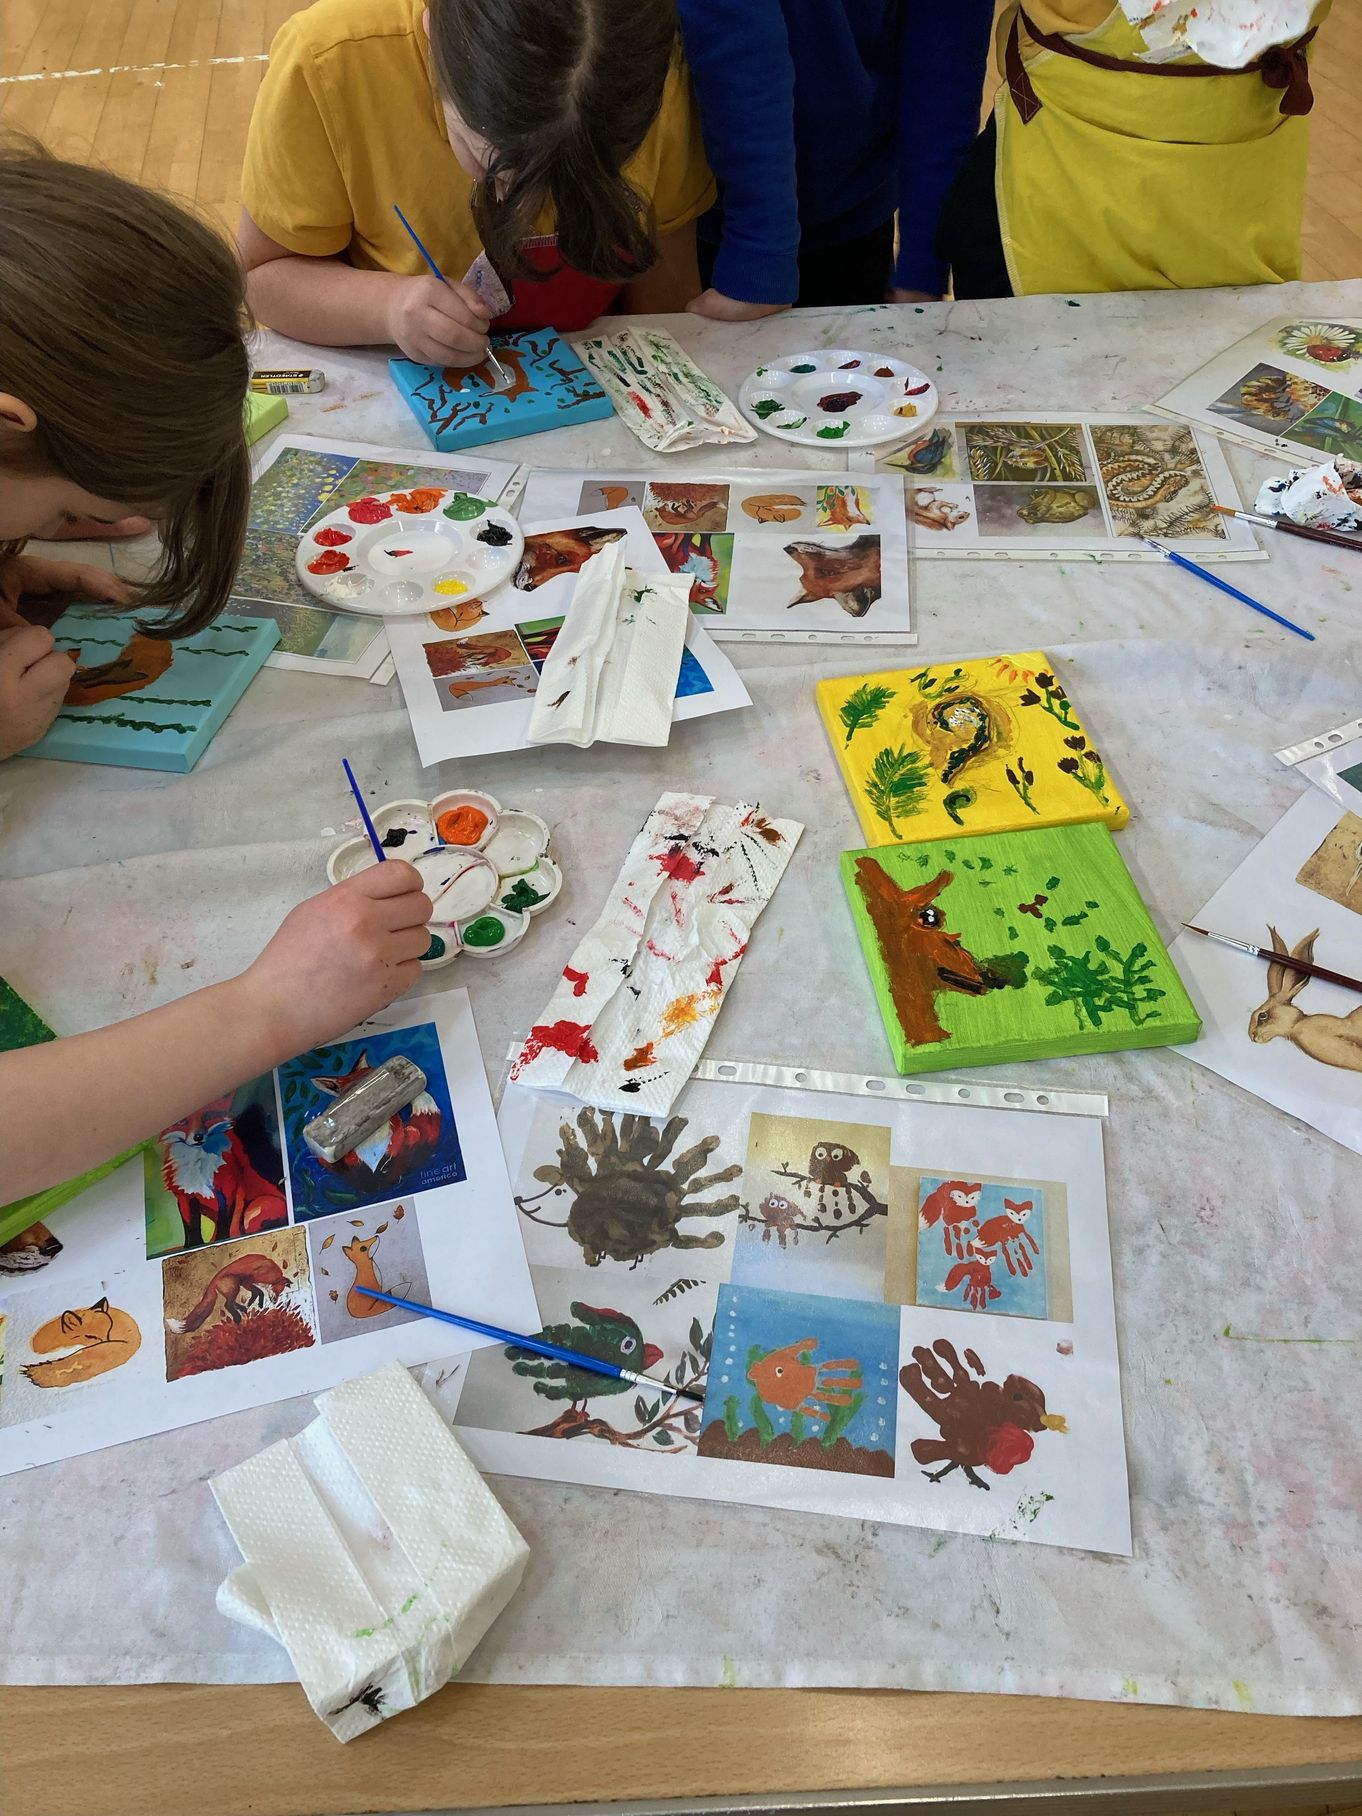 Children creating artwork for the exhibition